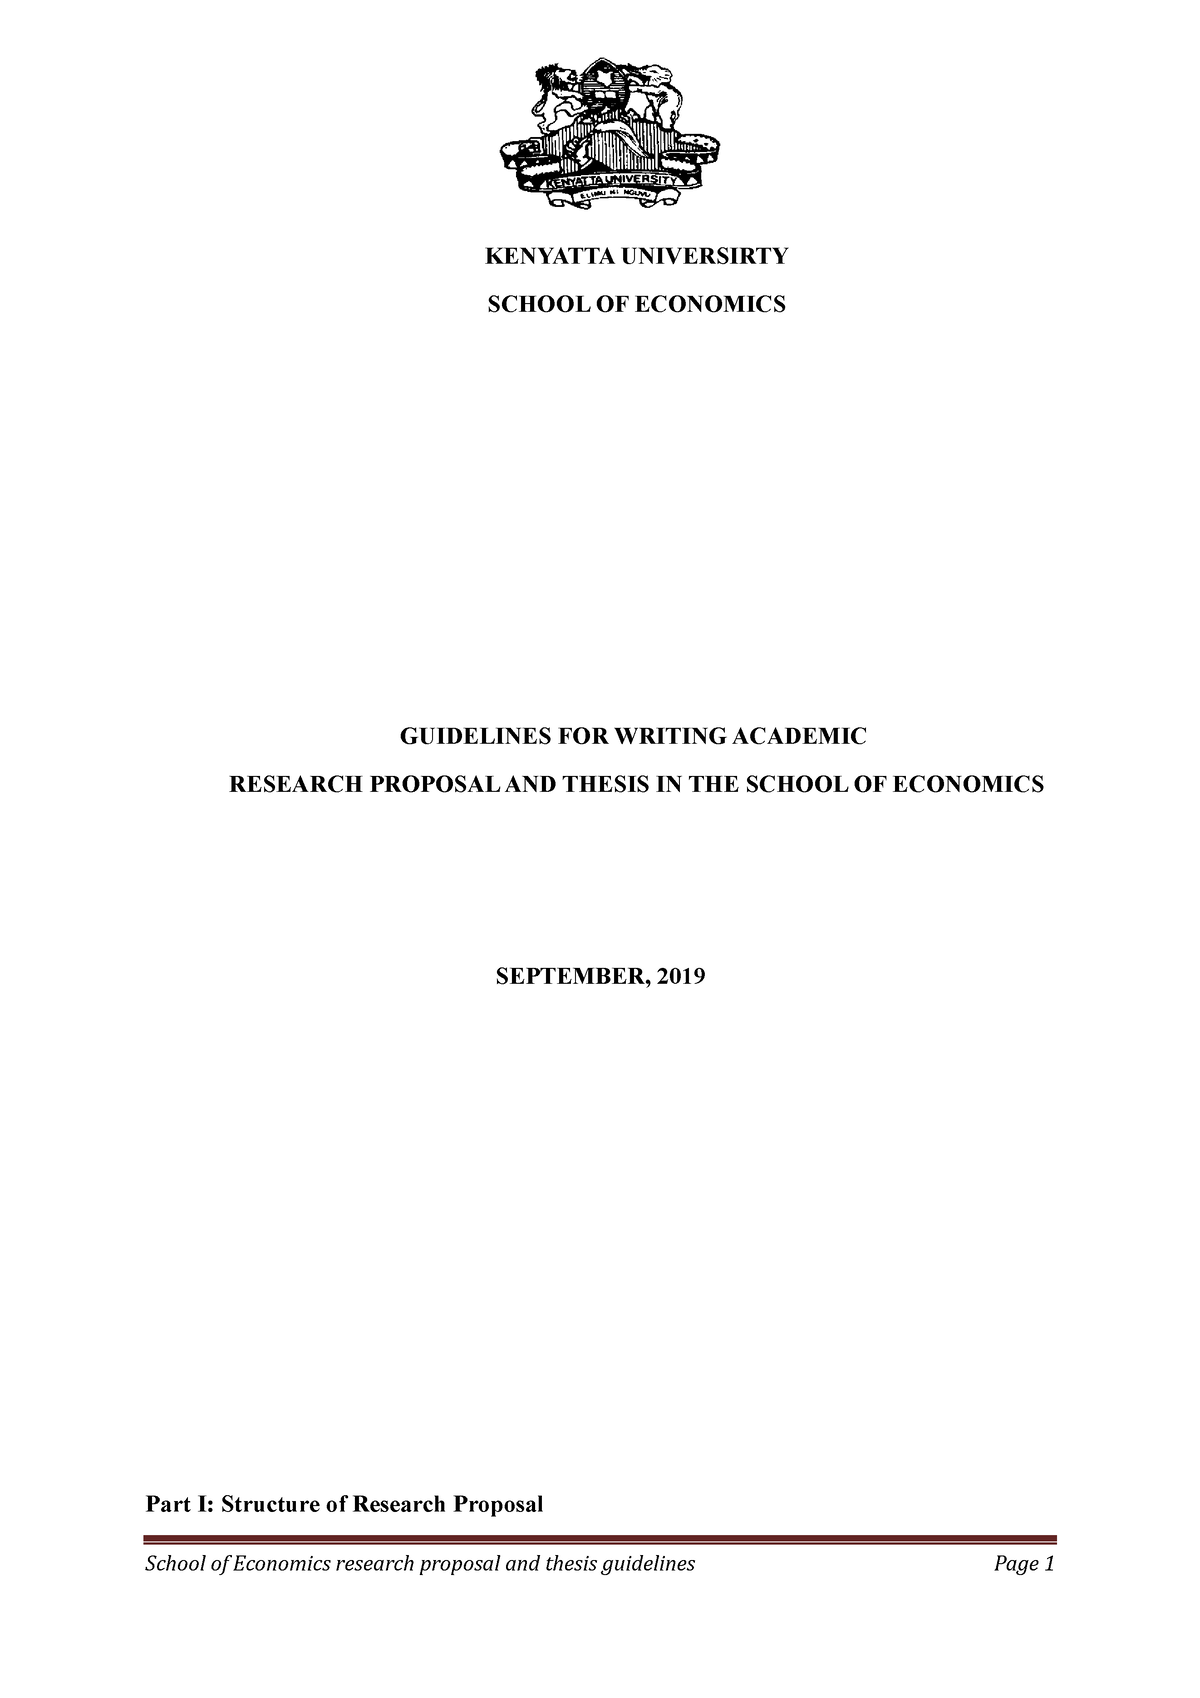 kenyatta university thesis guidelines